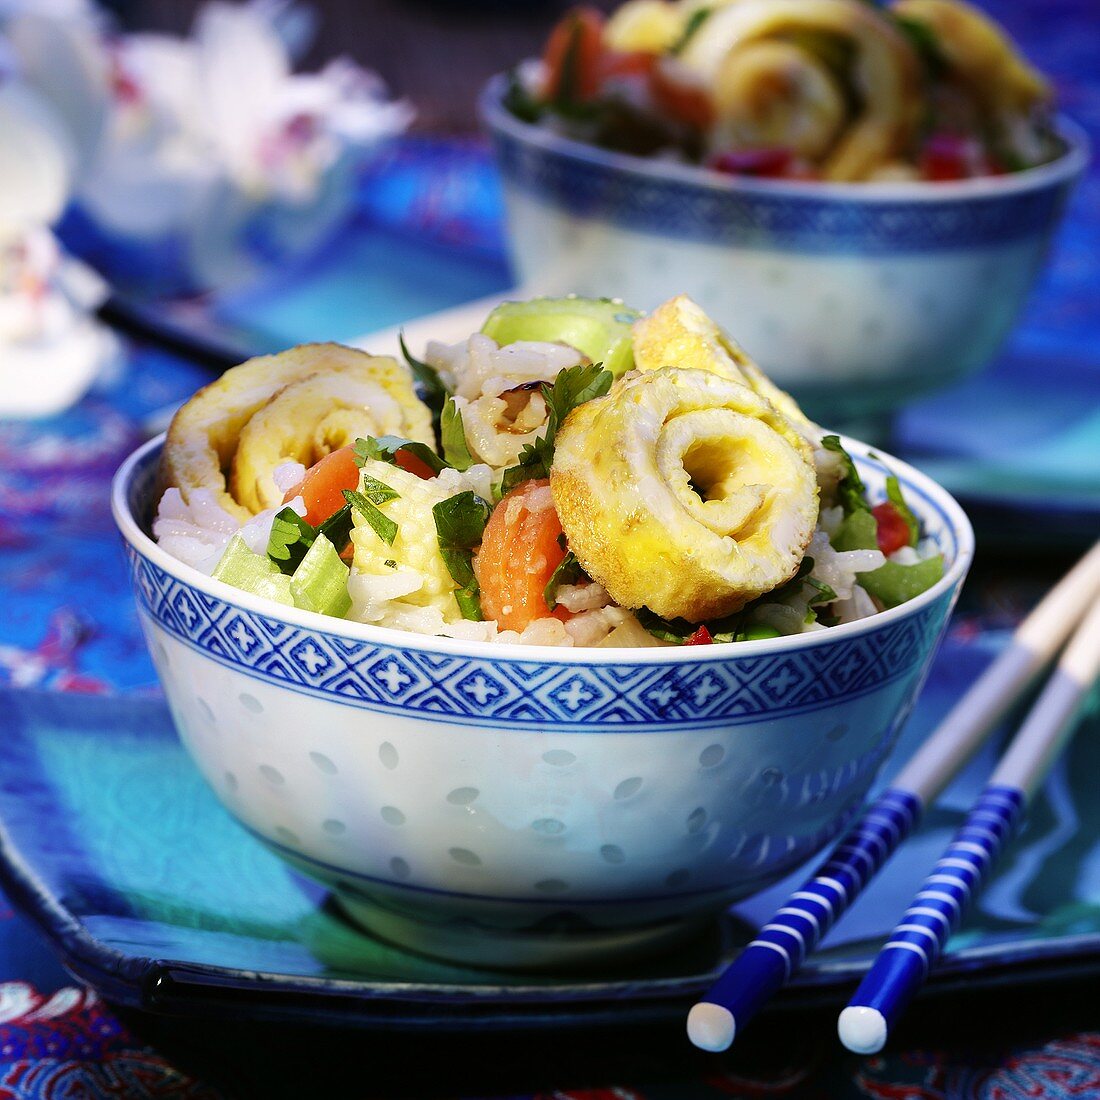 Nasi goreng with vegetables, coriander and pancake rolls